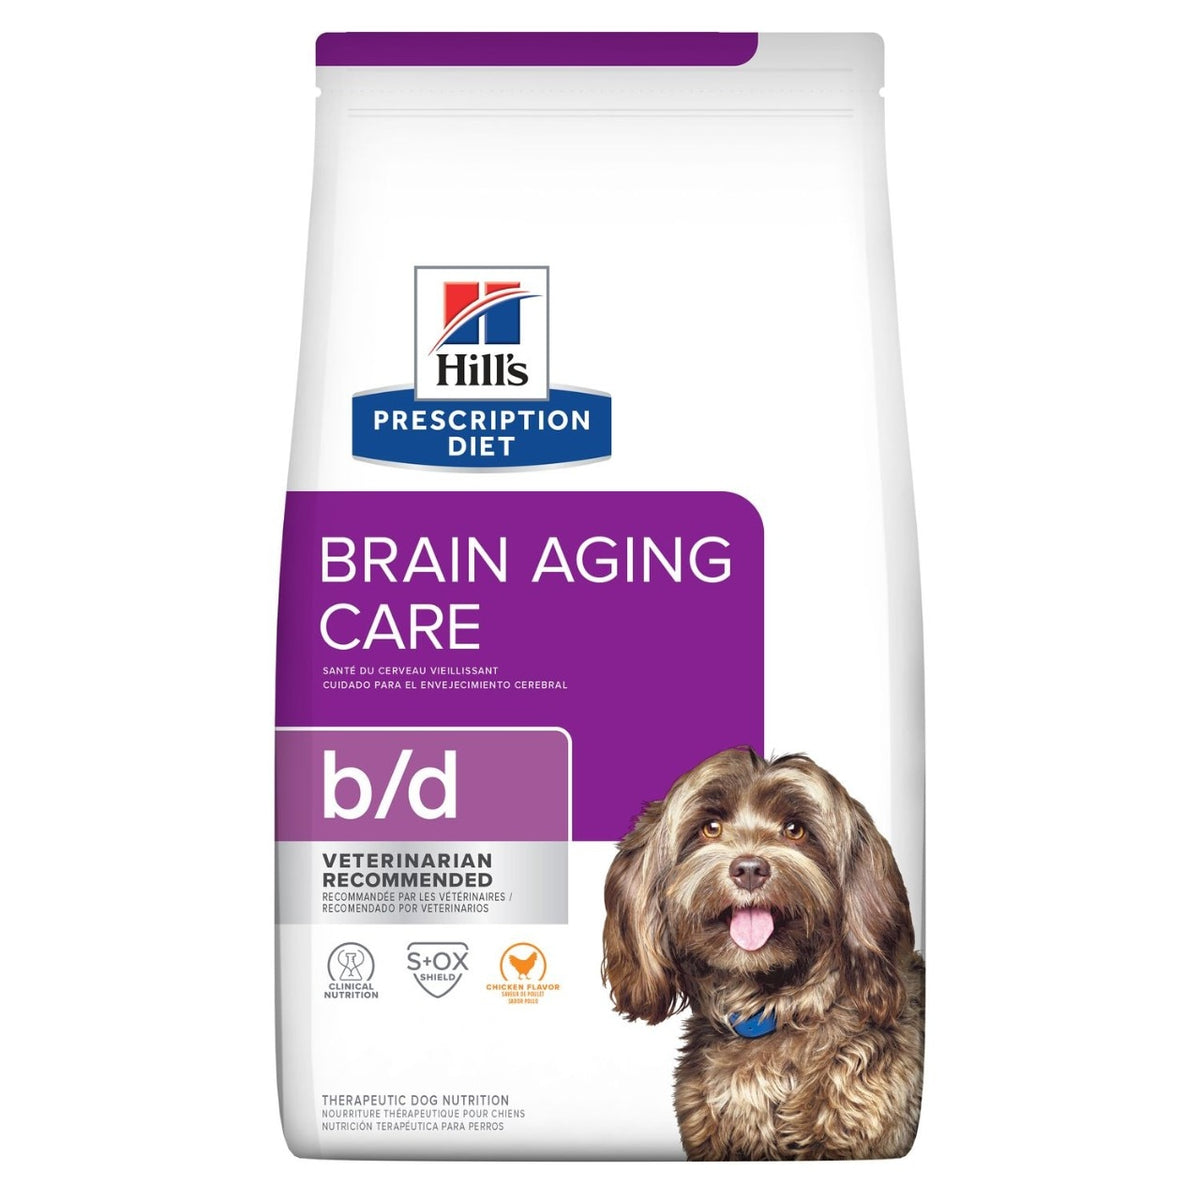 Hills Prescription Diet b/d Brain Aging Care Dog